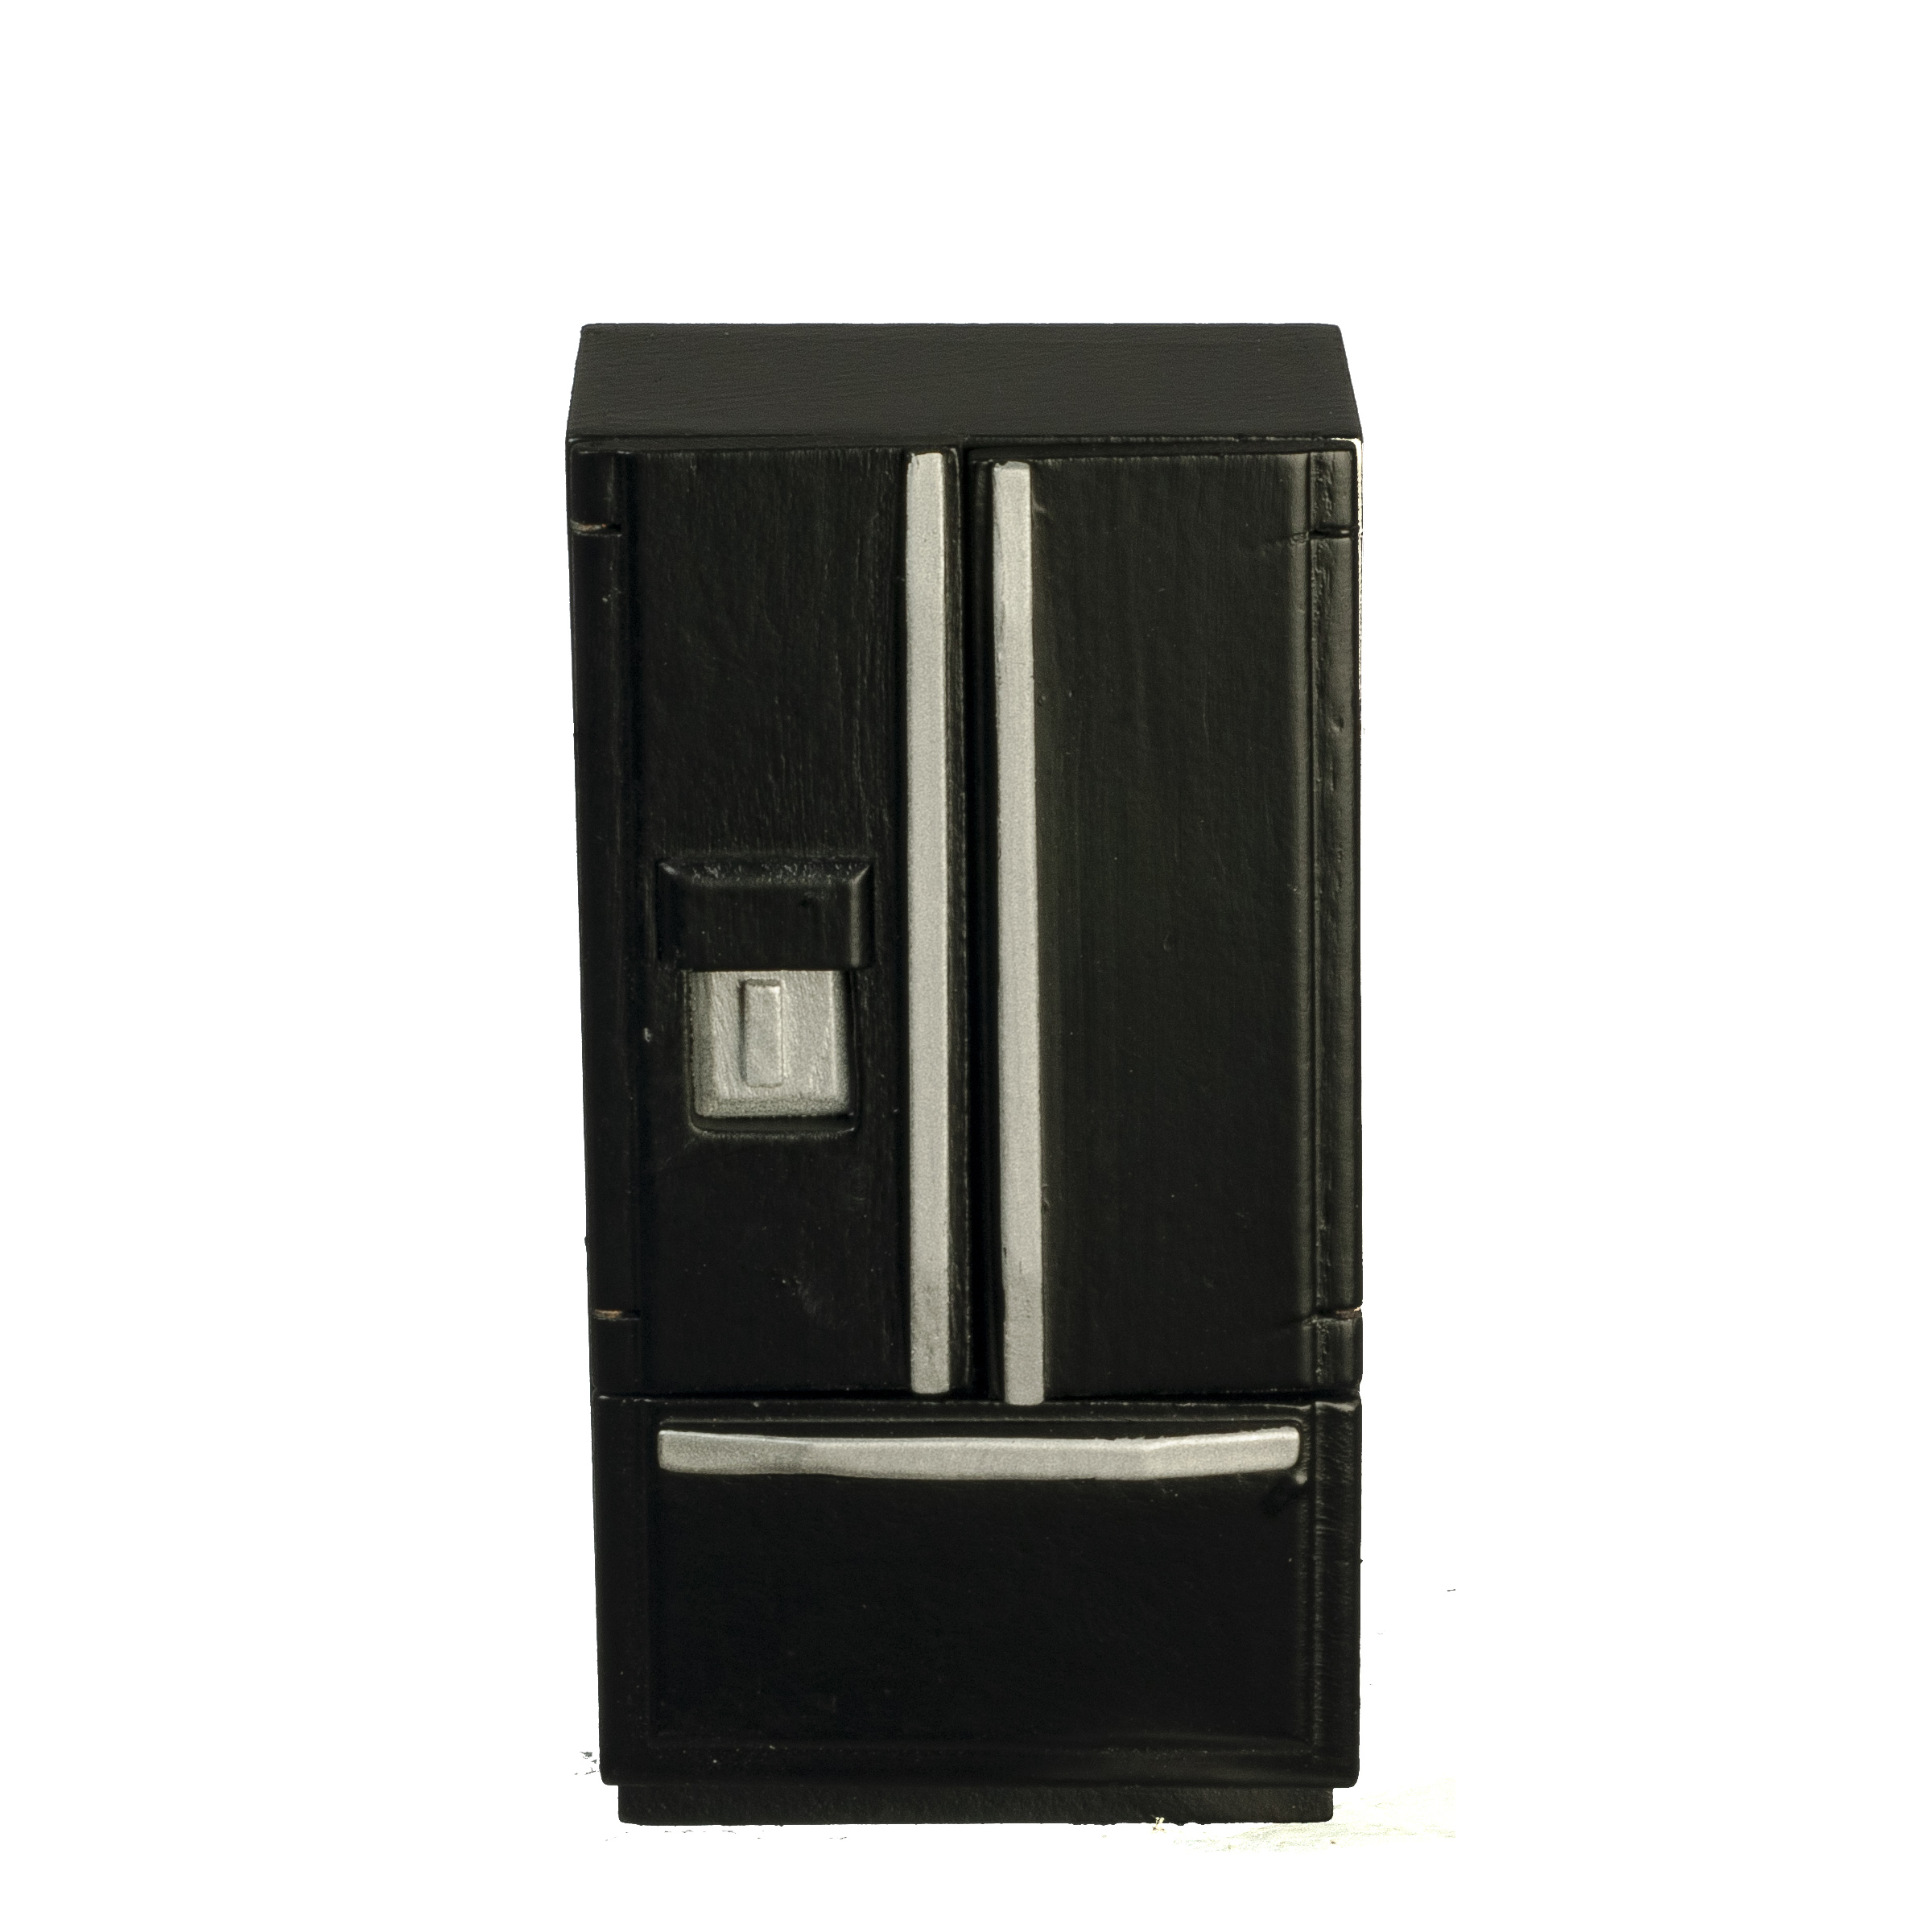 Modern Refrigerator Freezer on Bottom - Black